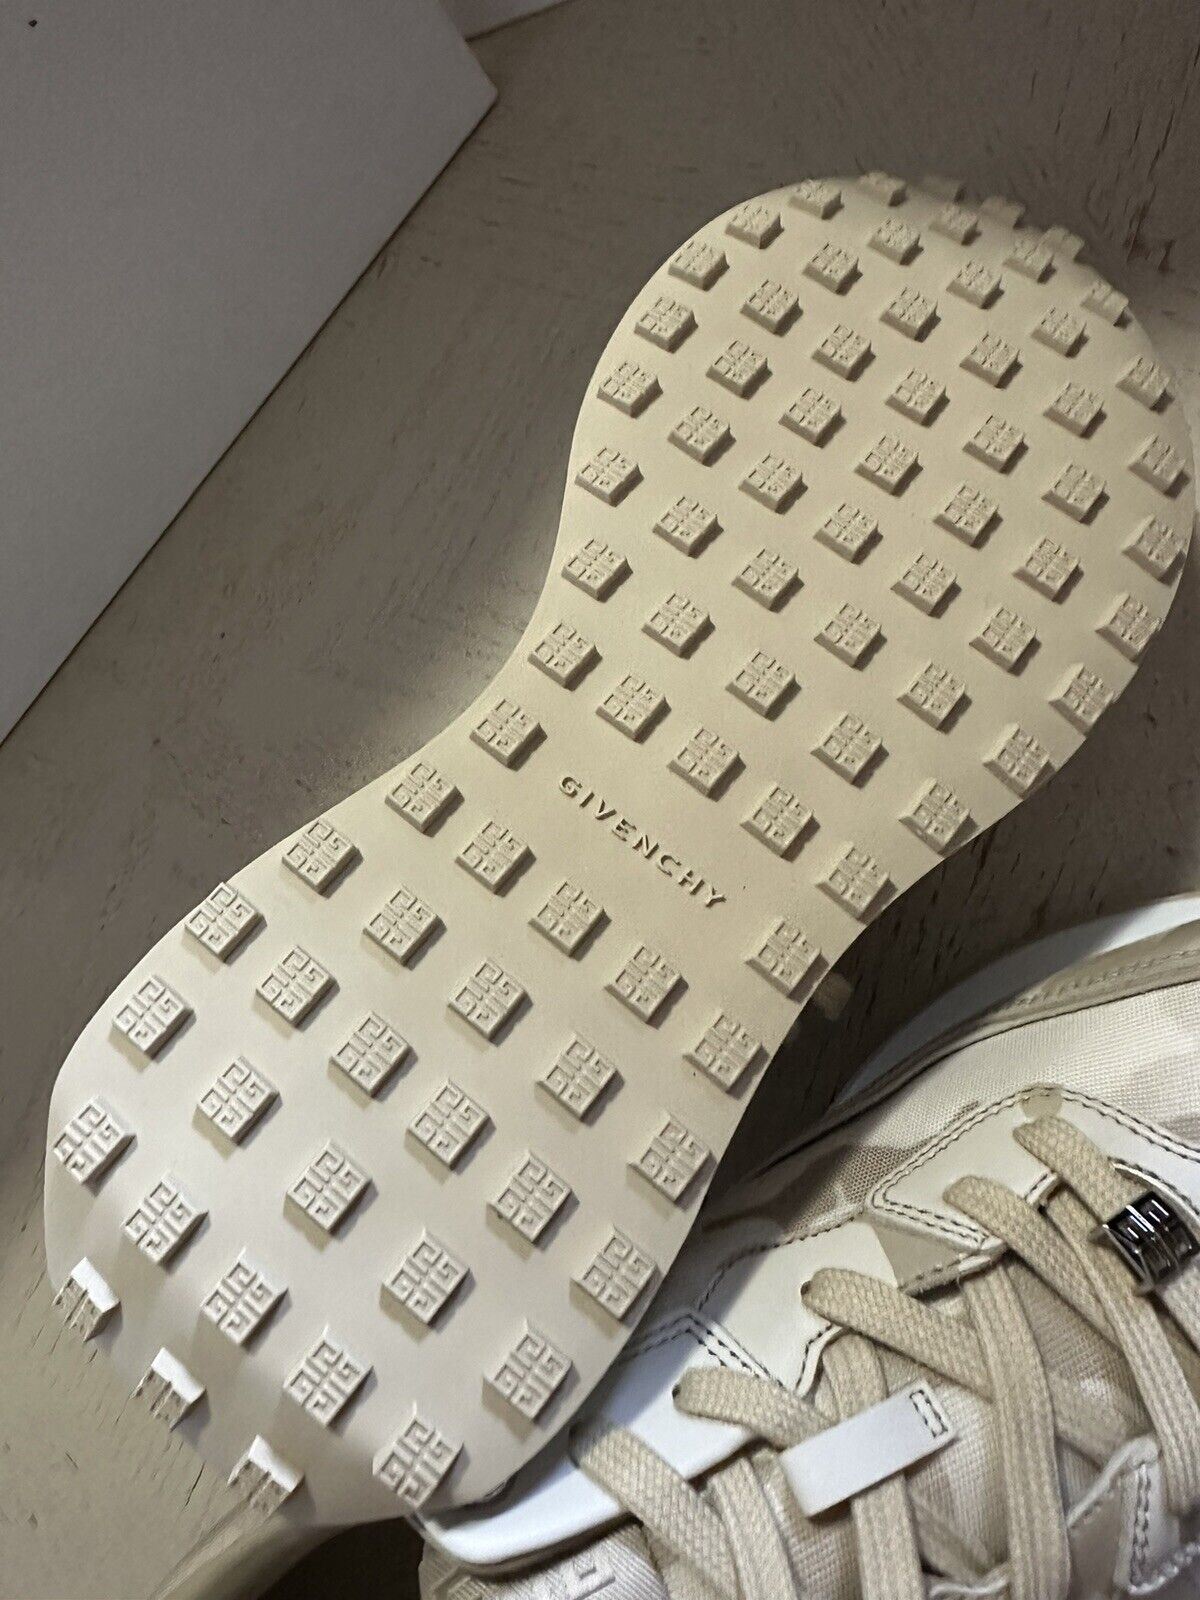 NIB $895 Givenchy Men’s Logo Leather/Canvas Sneakers Shoes Beige 11 US/44 Eu